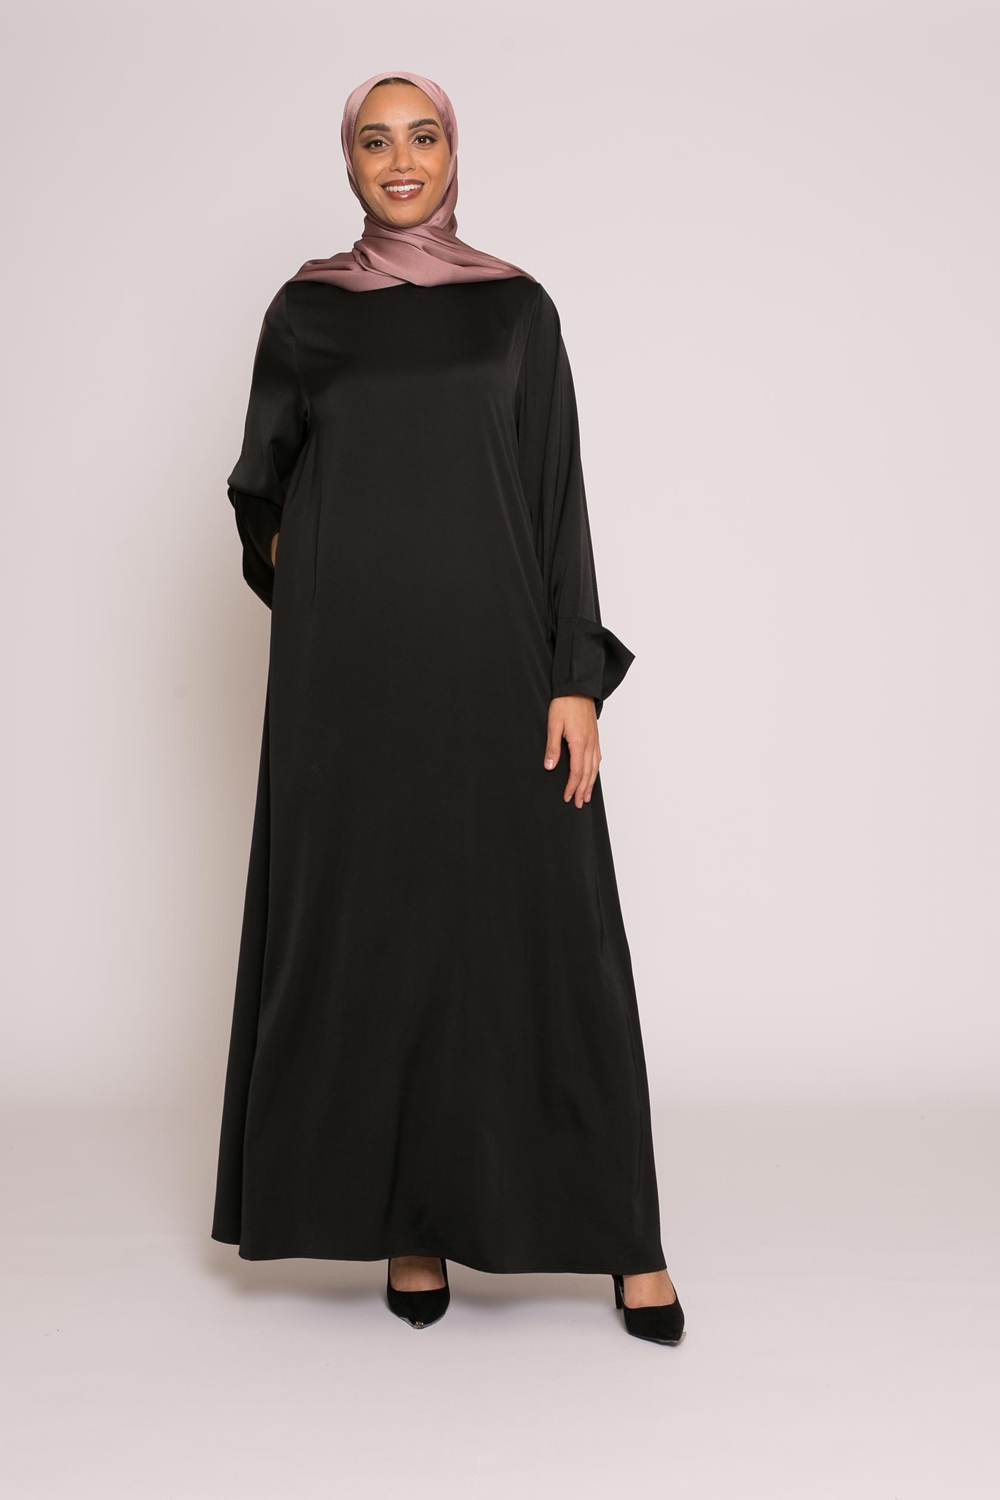 Abaya luxery satiné noir